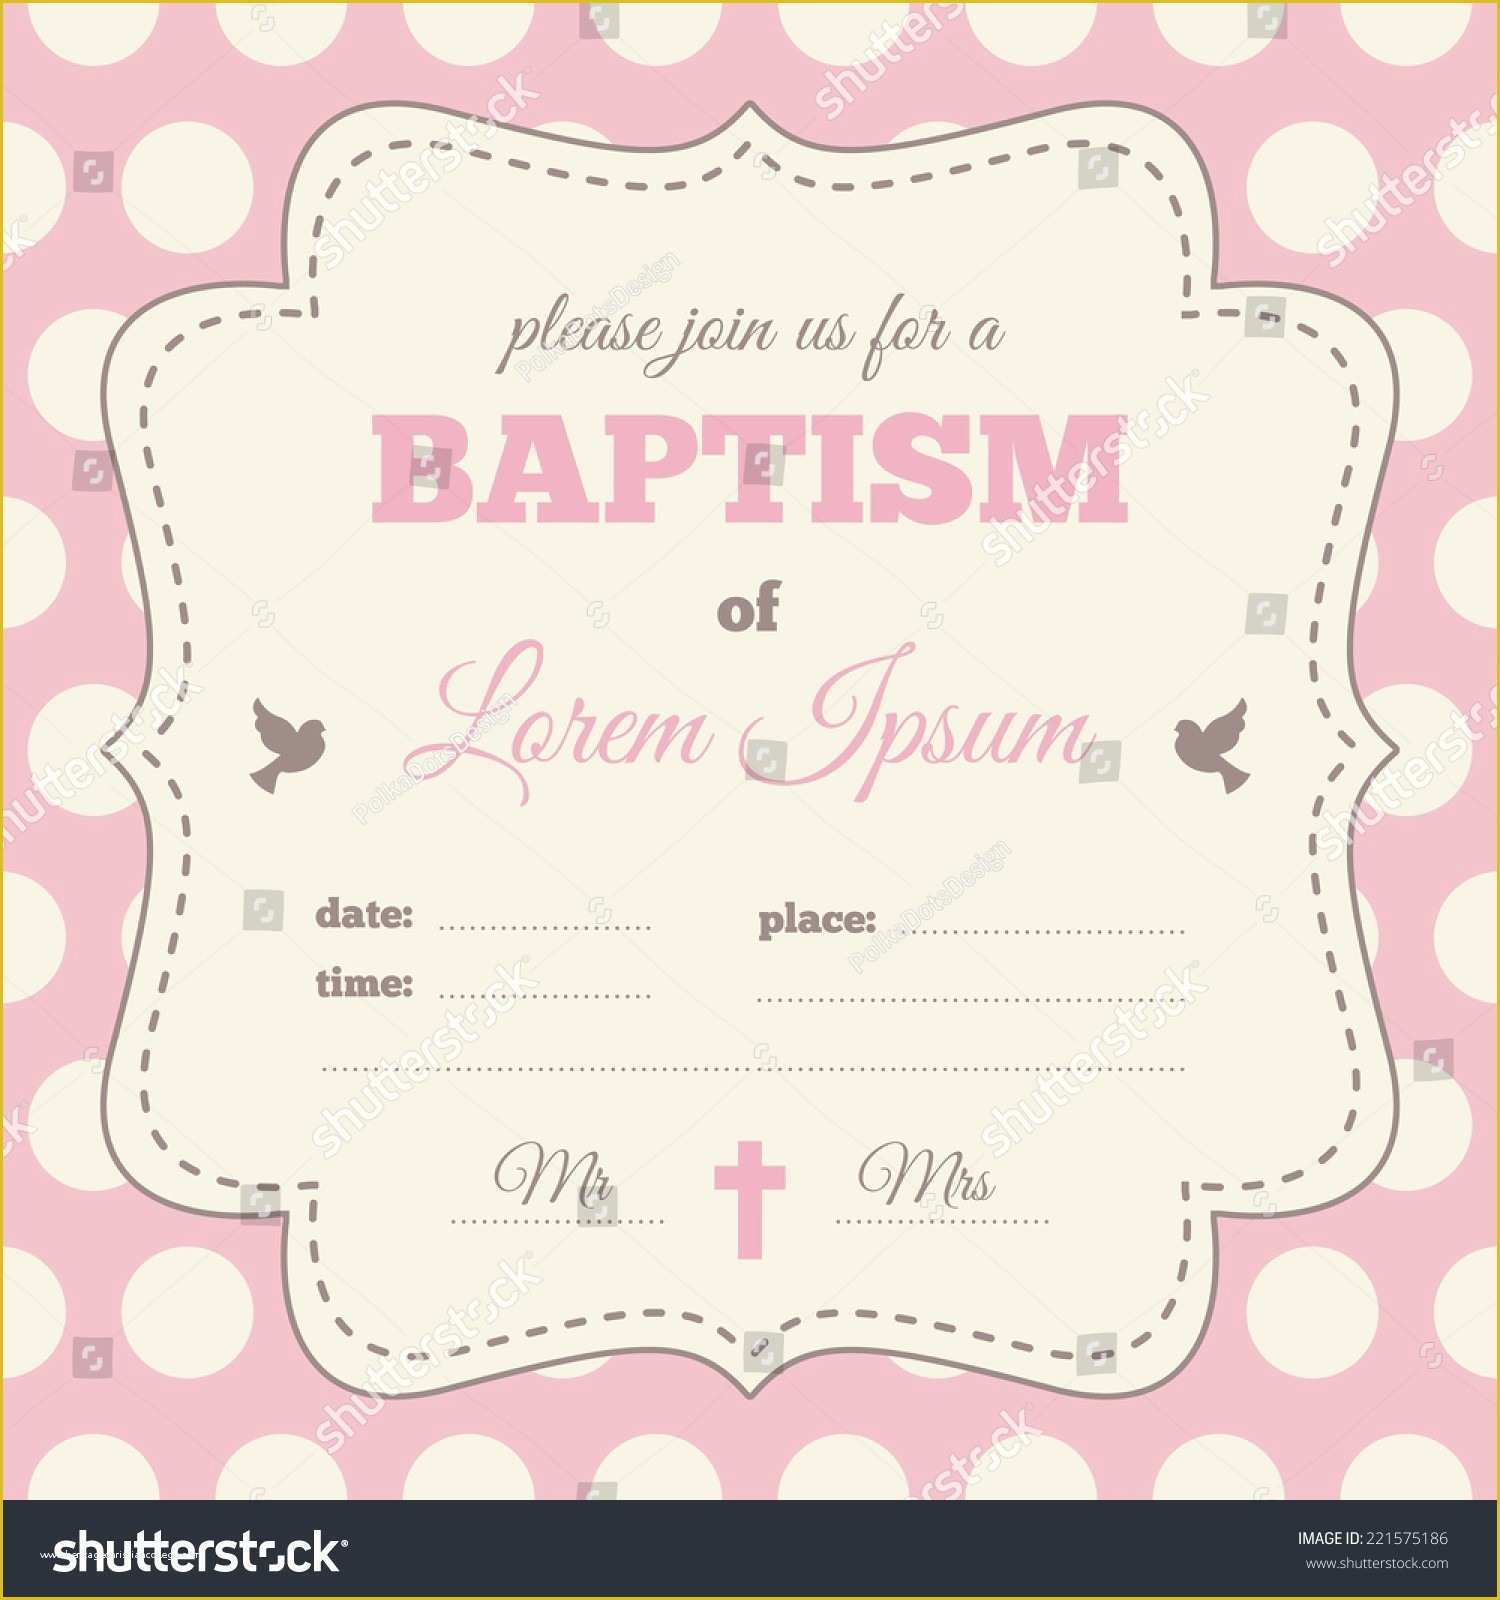 Baby Girl Baptism Invitation Free Templates Of Baby Girl Baptism Invitation Free Templates Gallery